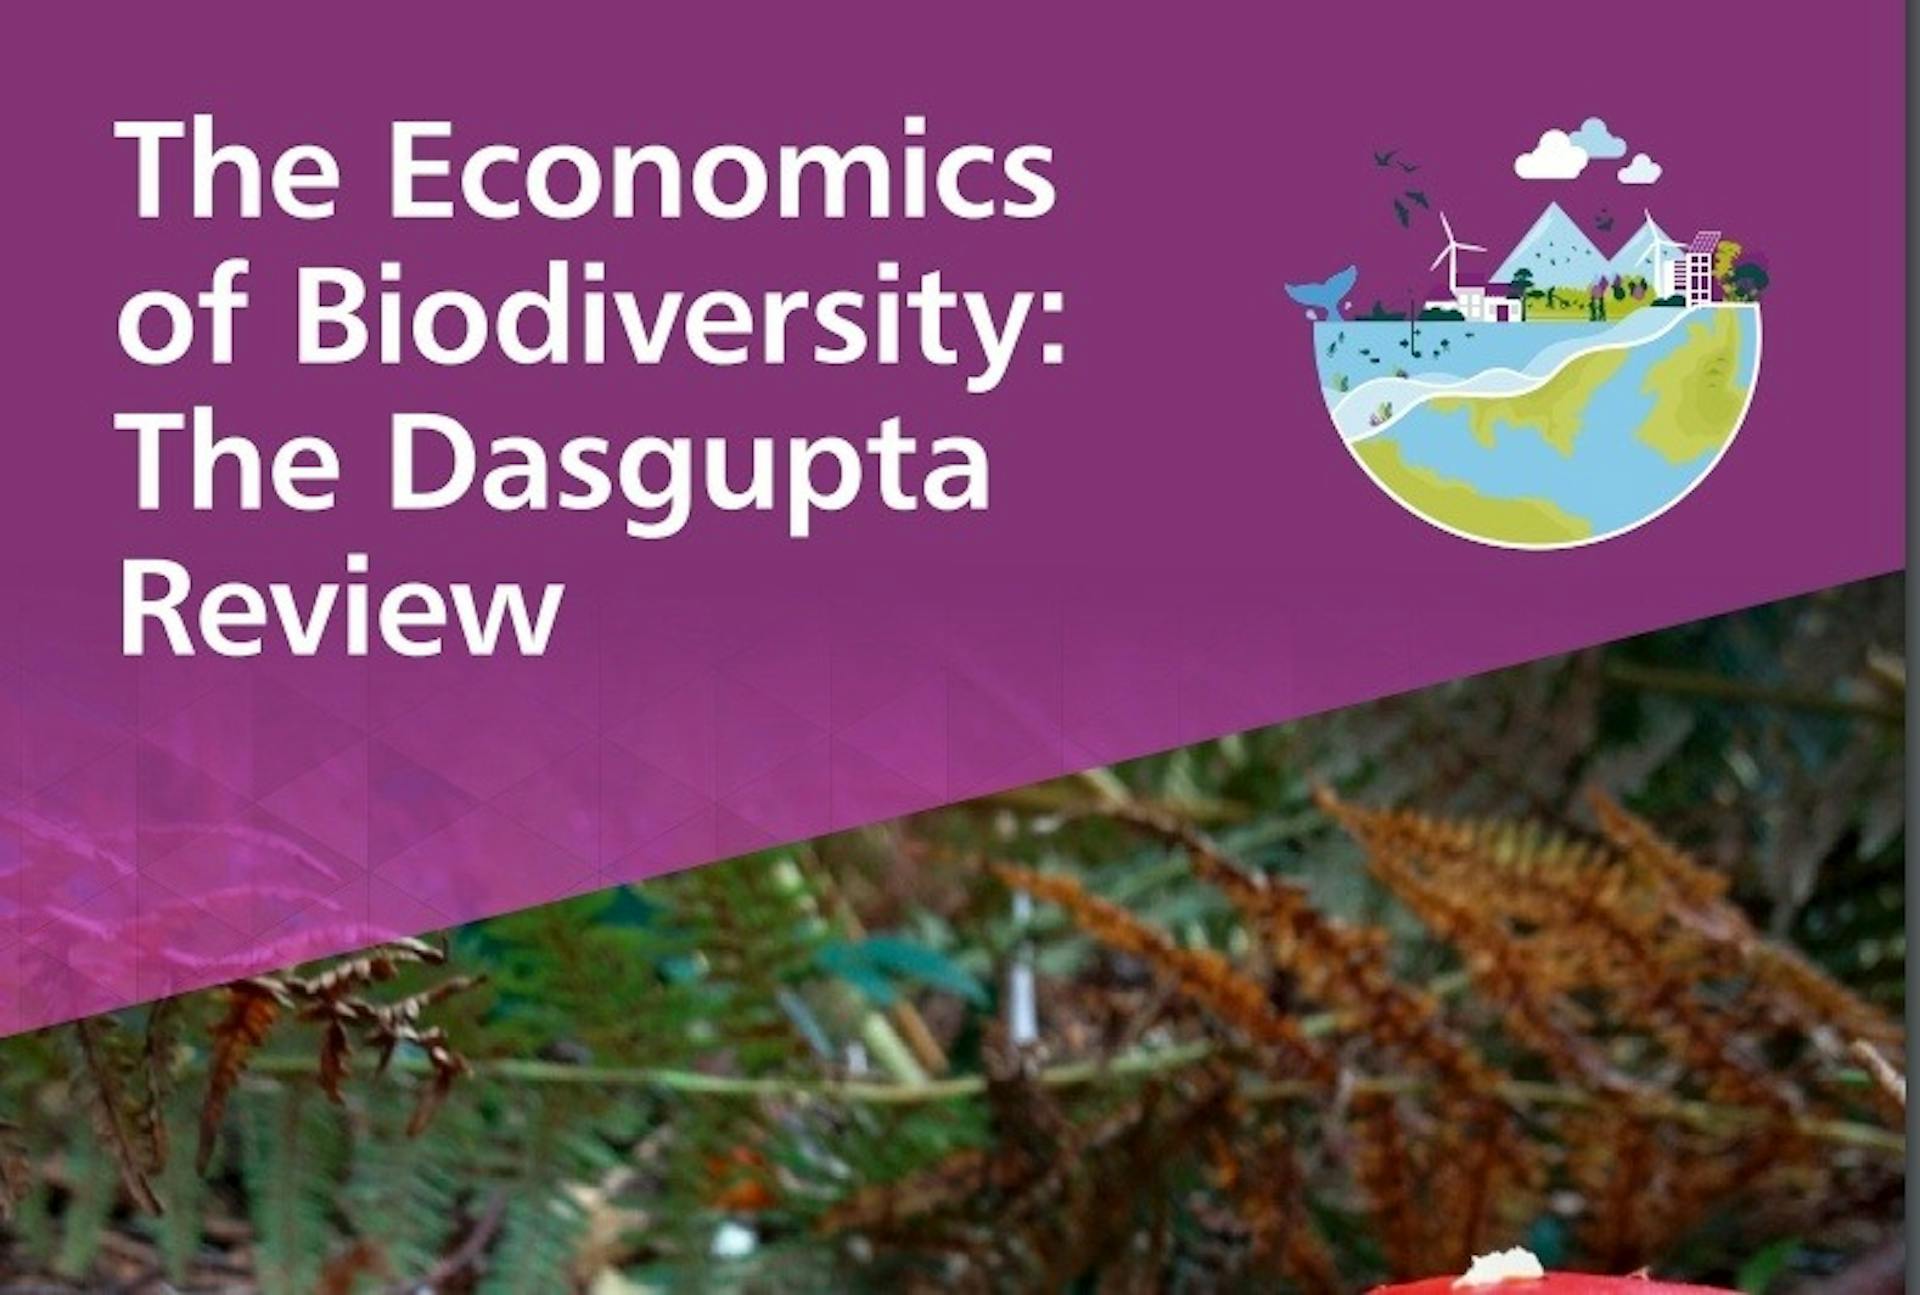 https://www.gov.uk/government/publications/final-report-the-economics-of-biodiversity-the-dasgupta-review